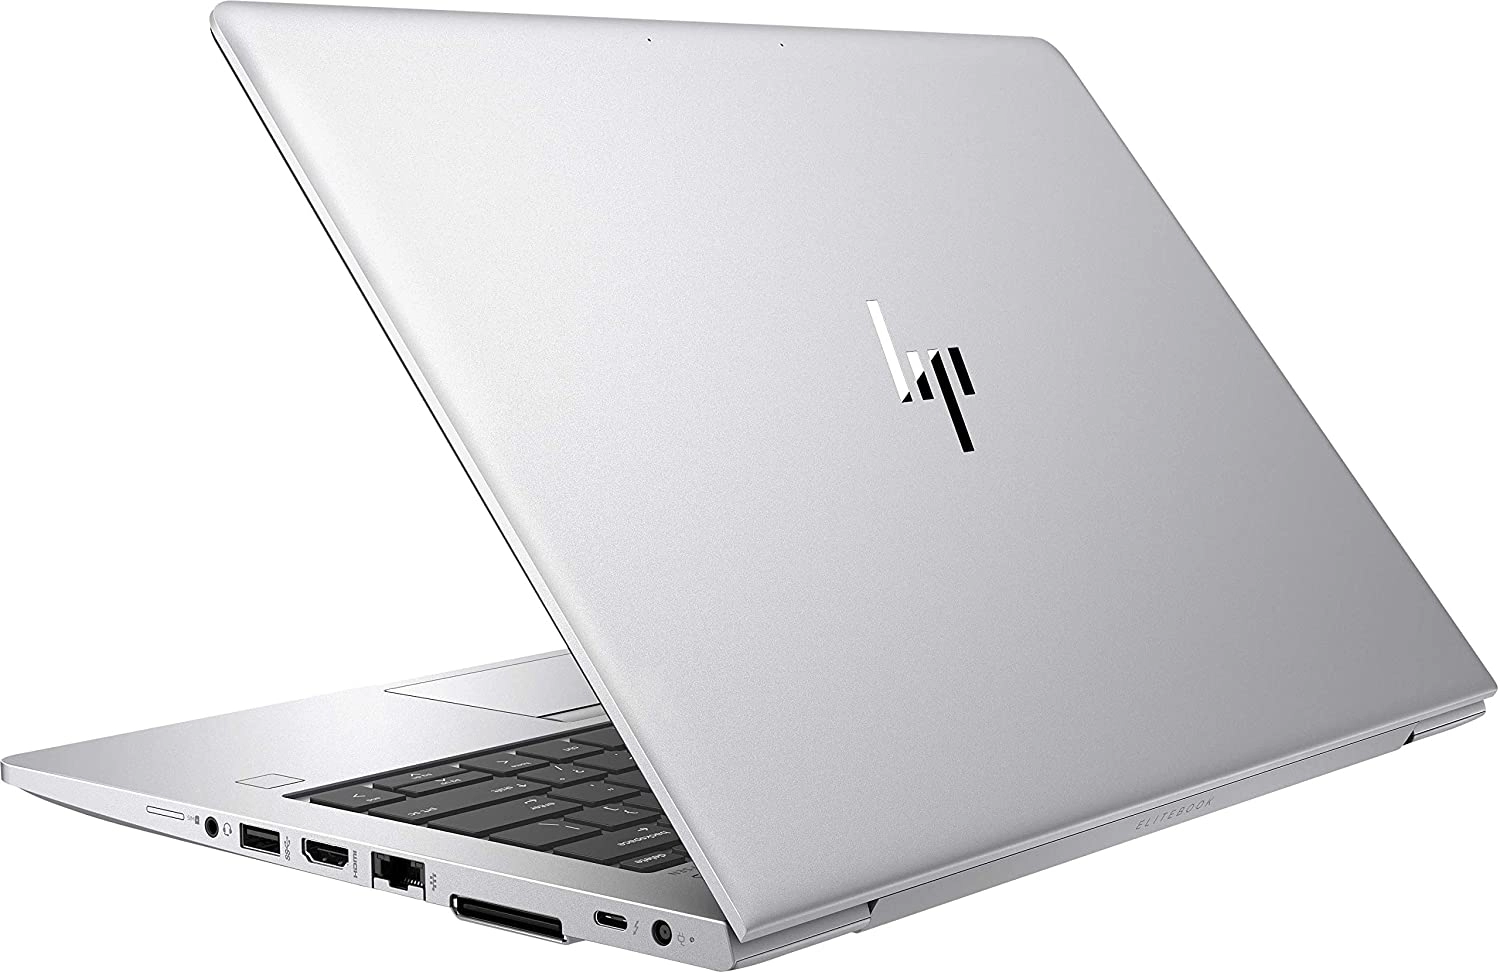 HP EliteBook 830 G6 laptop image